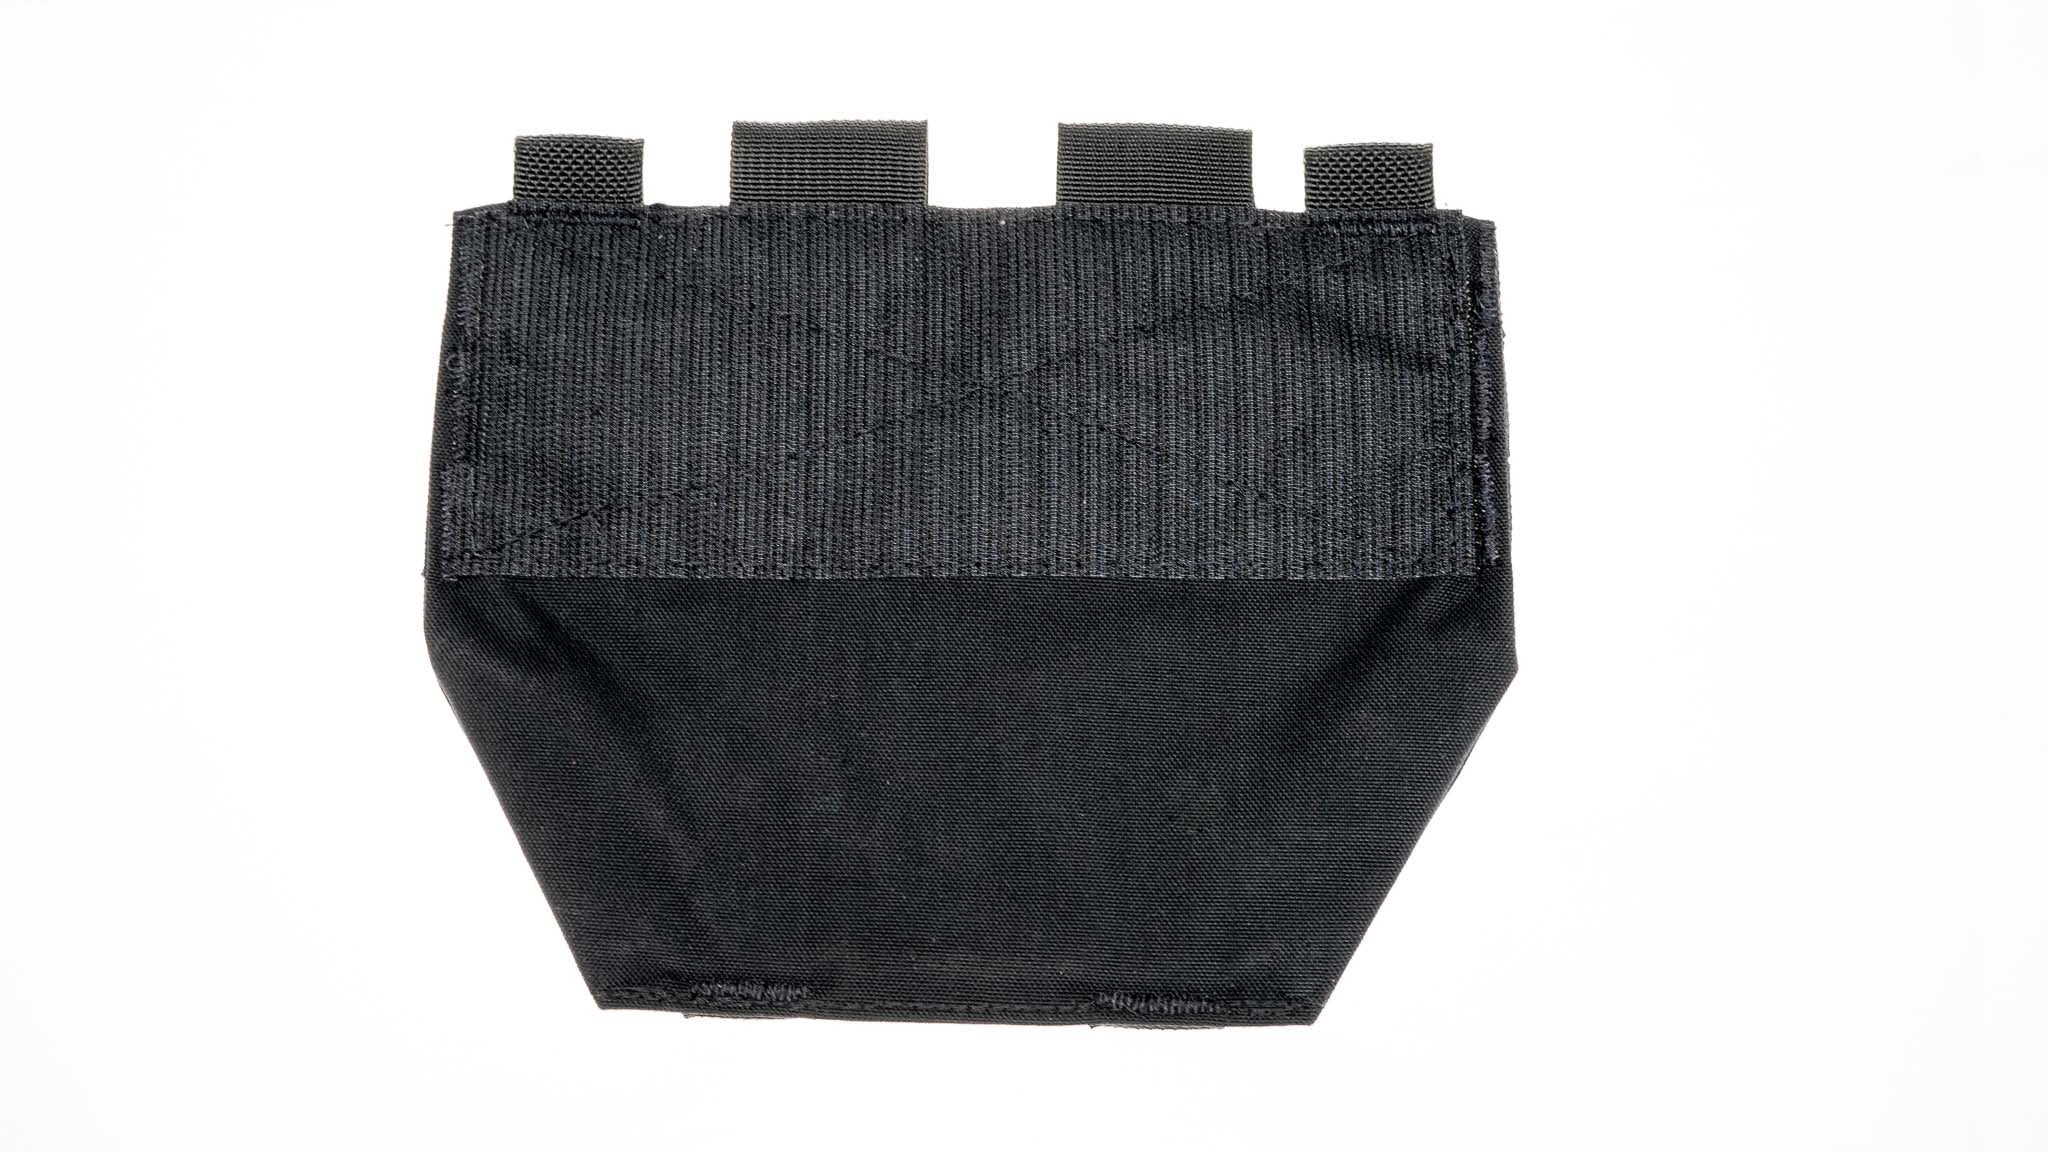 FS Pack Bar Bag Attachment System